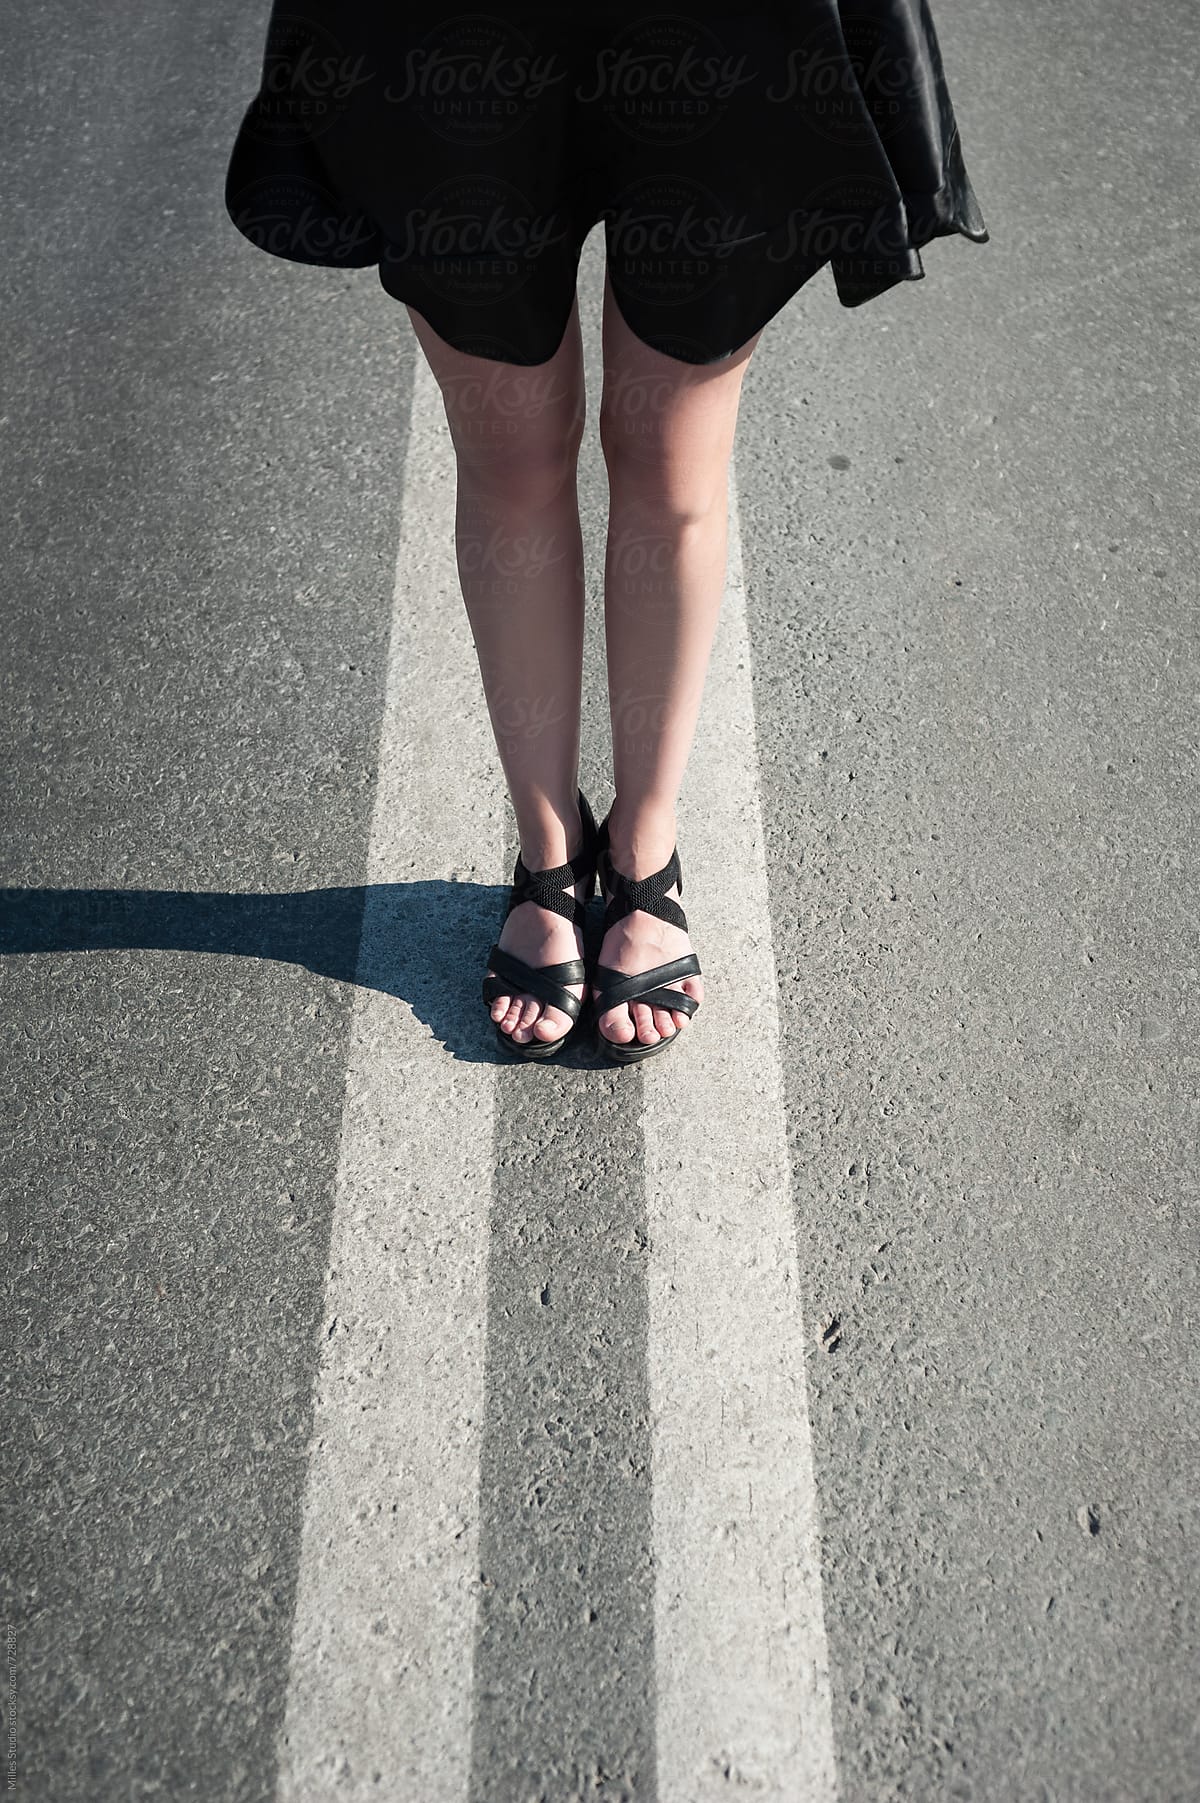 Female legs on a road